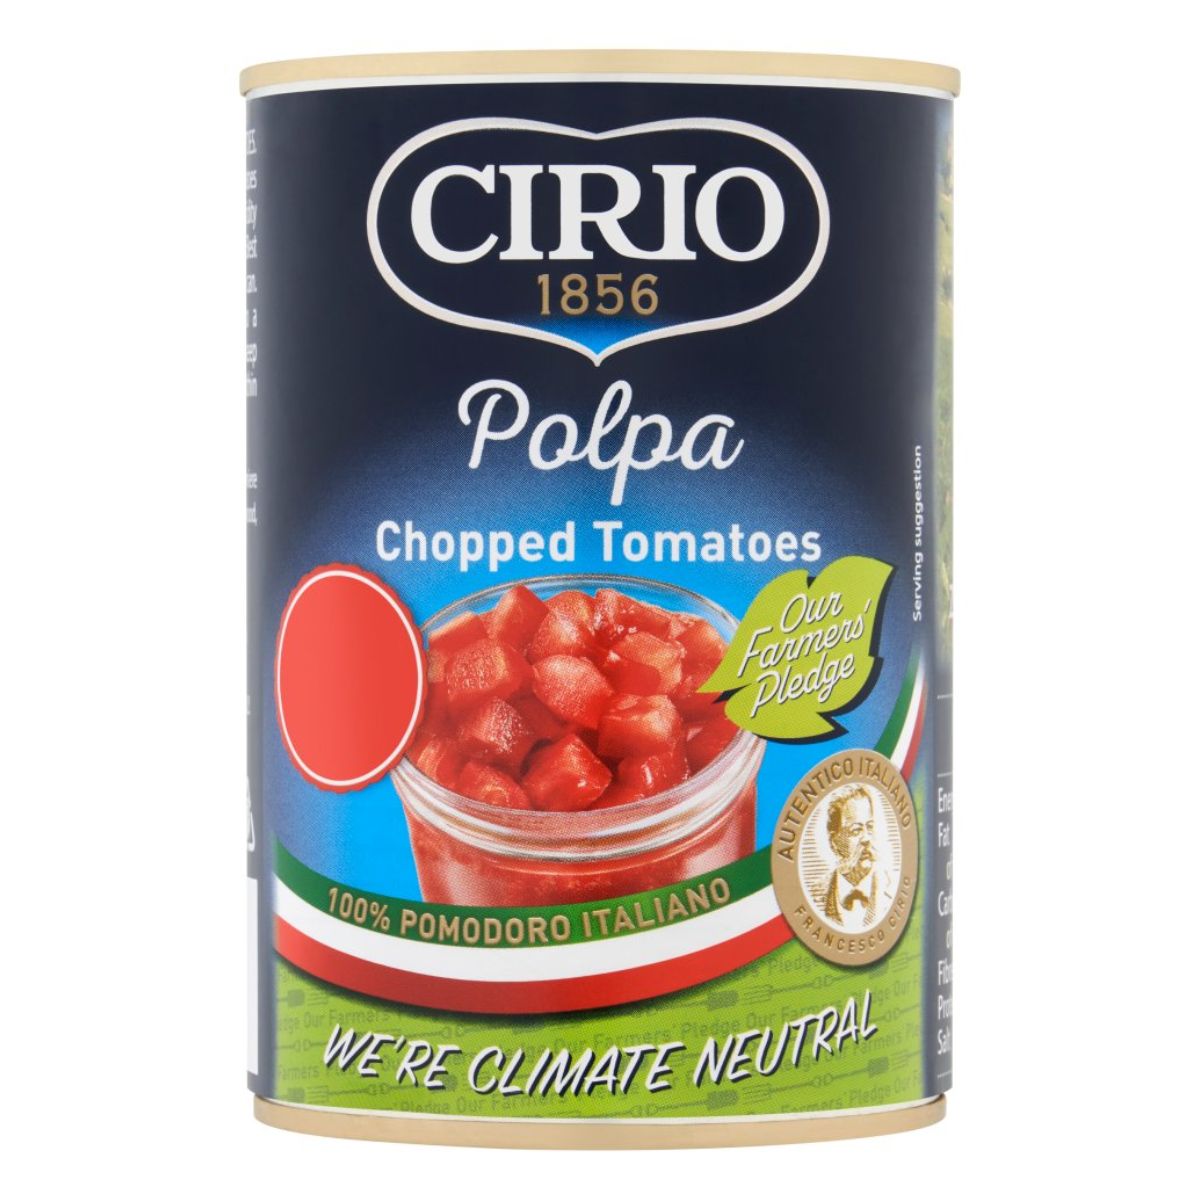 A can of Cirio Polpa Chopped Tomatoes - 400g.